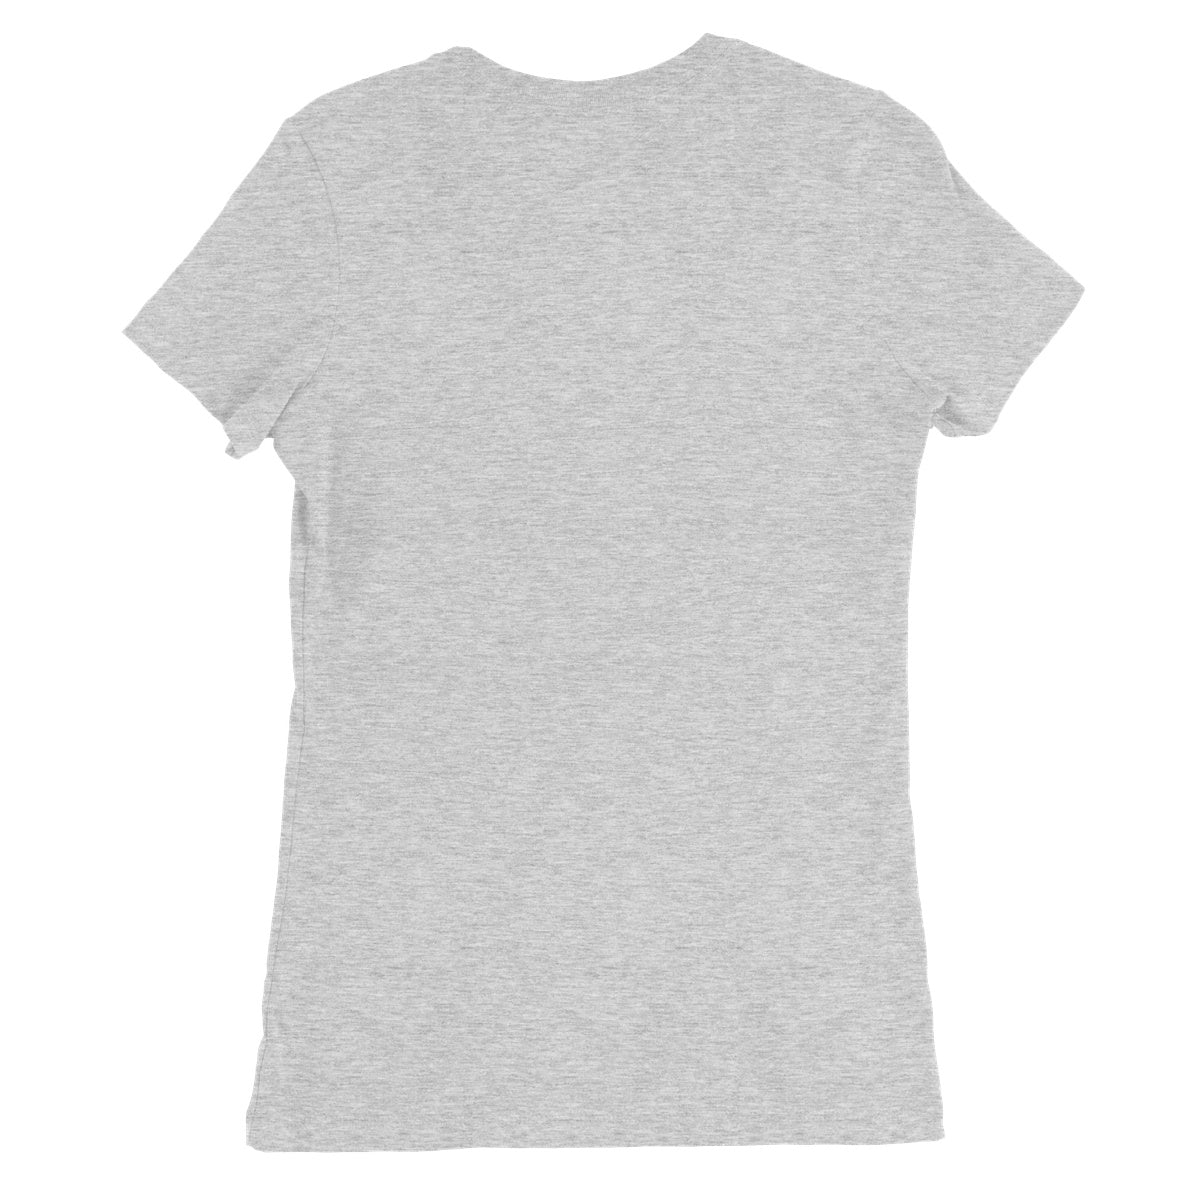 AQUA HMP F - Seasrider - Women's Fine Jersey T-Shirt